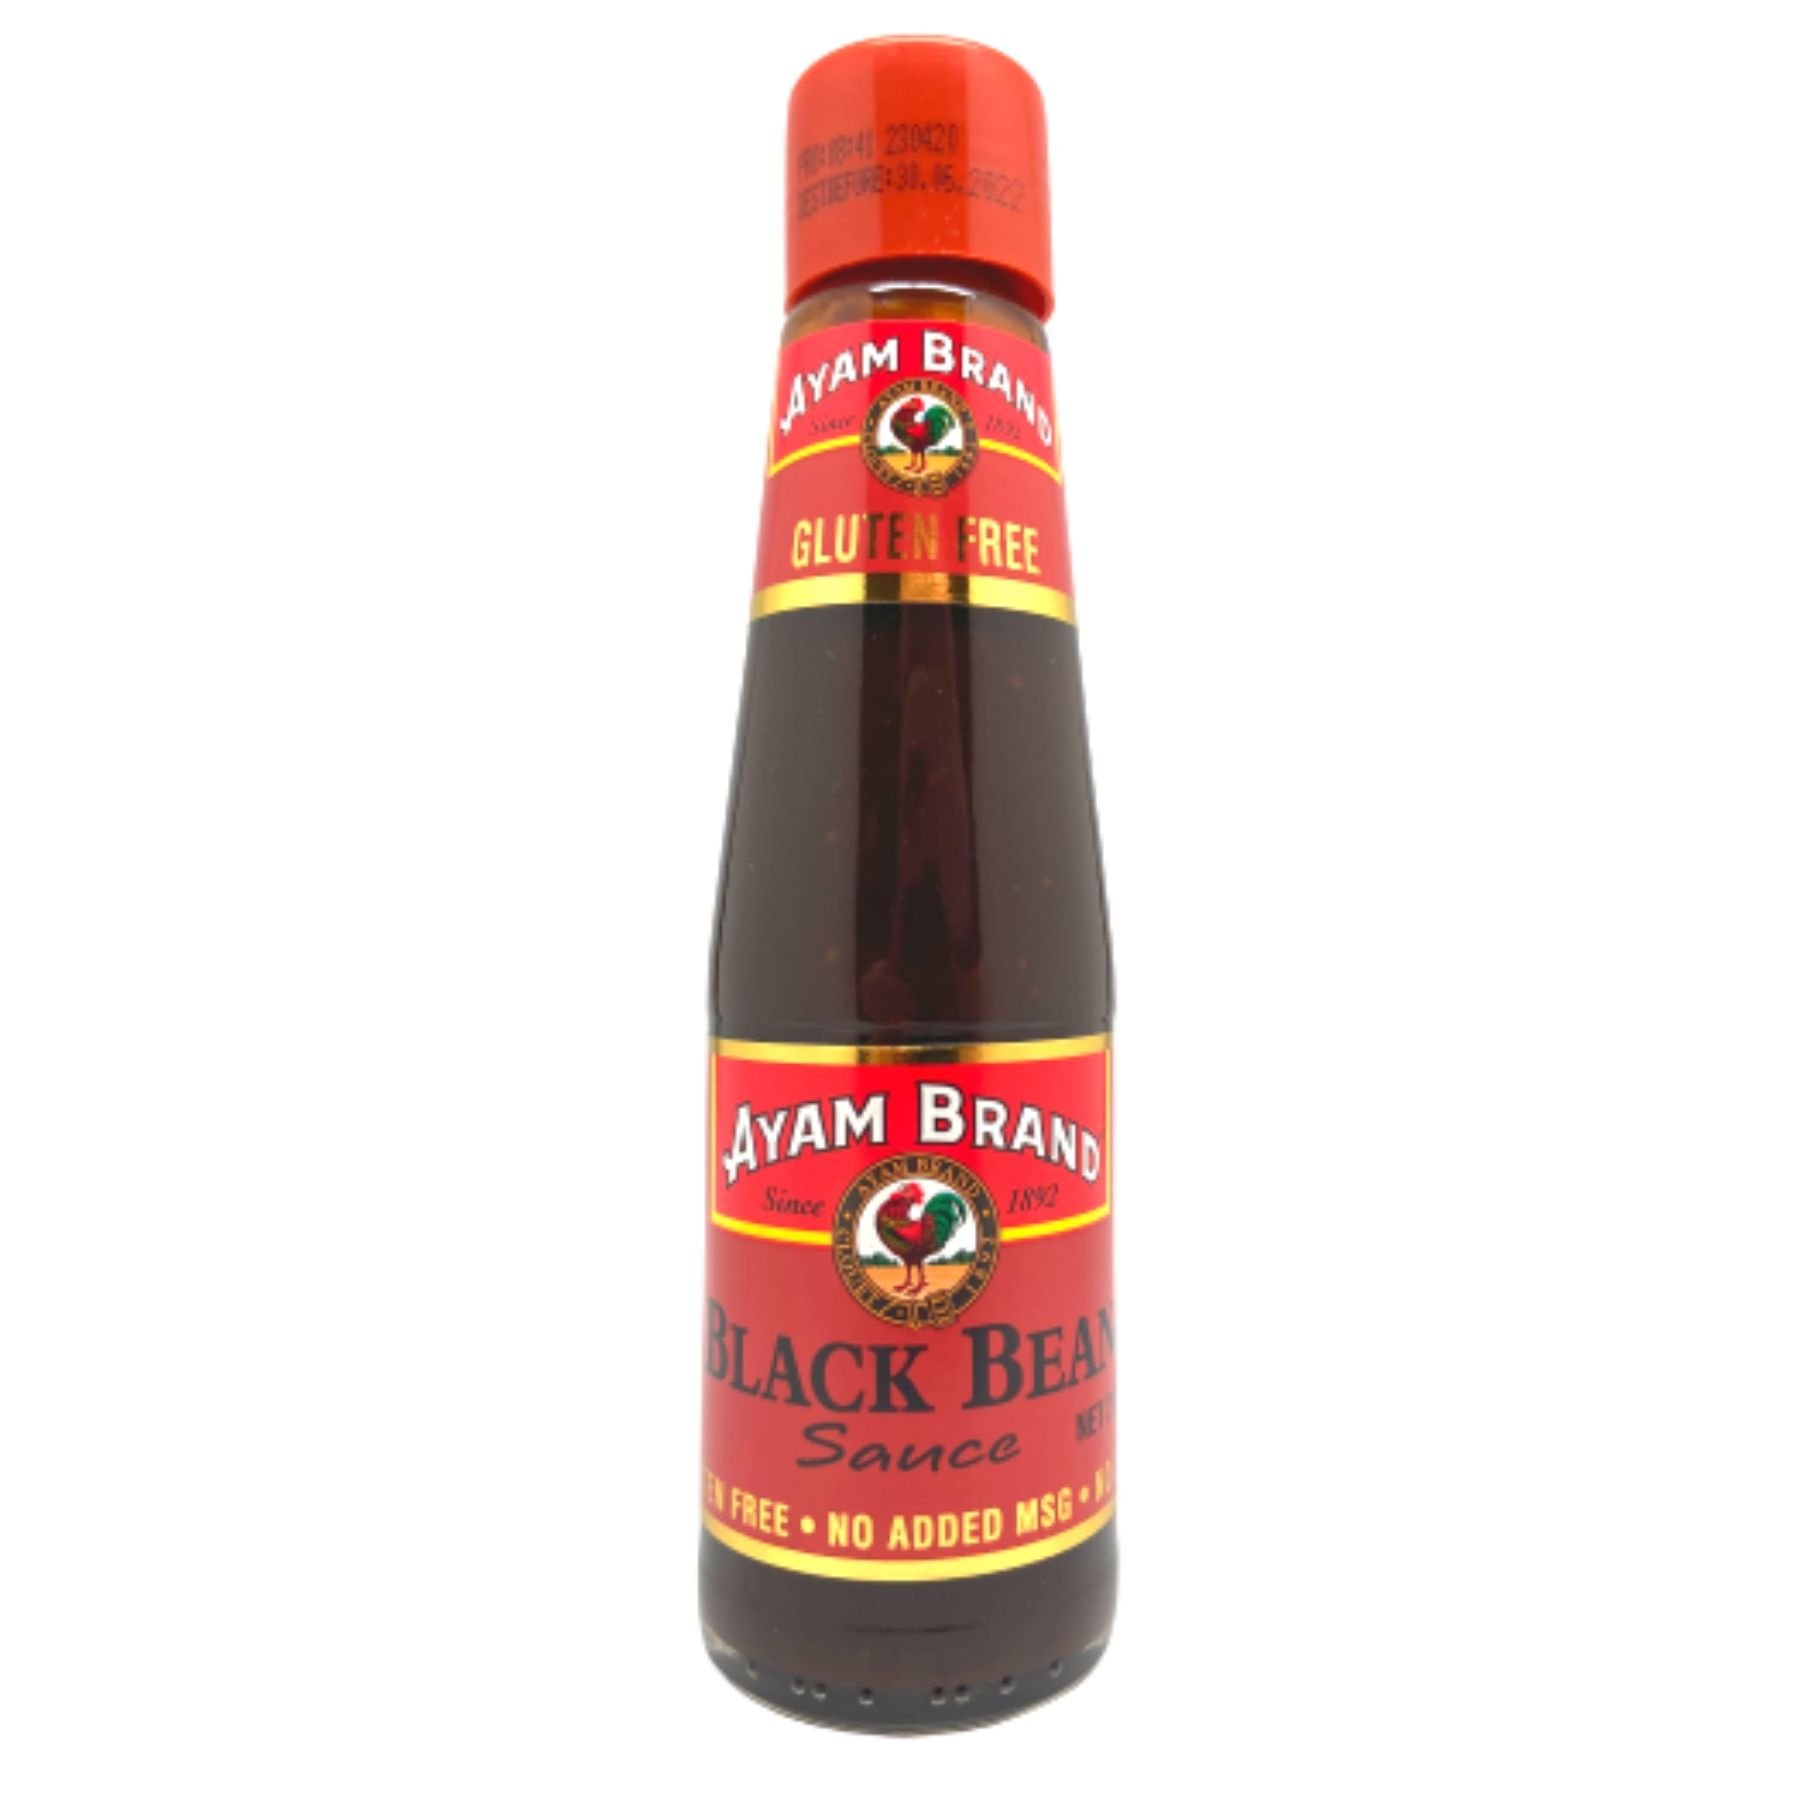 Ayam Brand Black Bean Sauce (Gluten